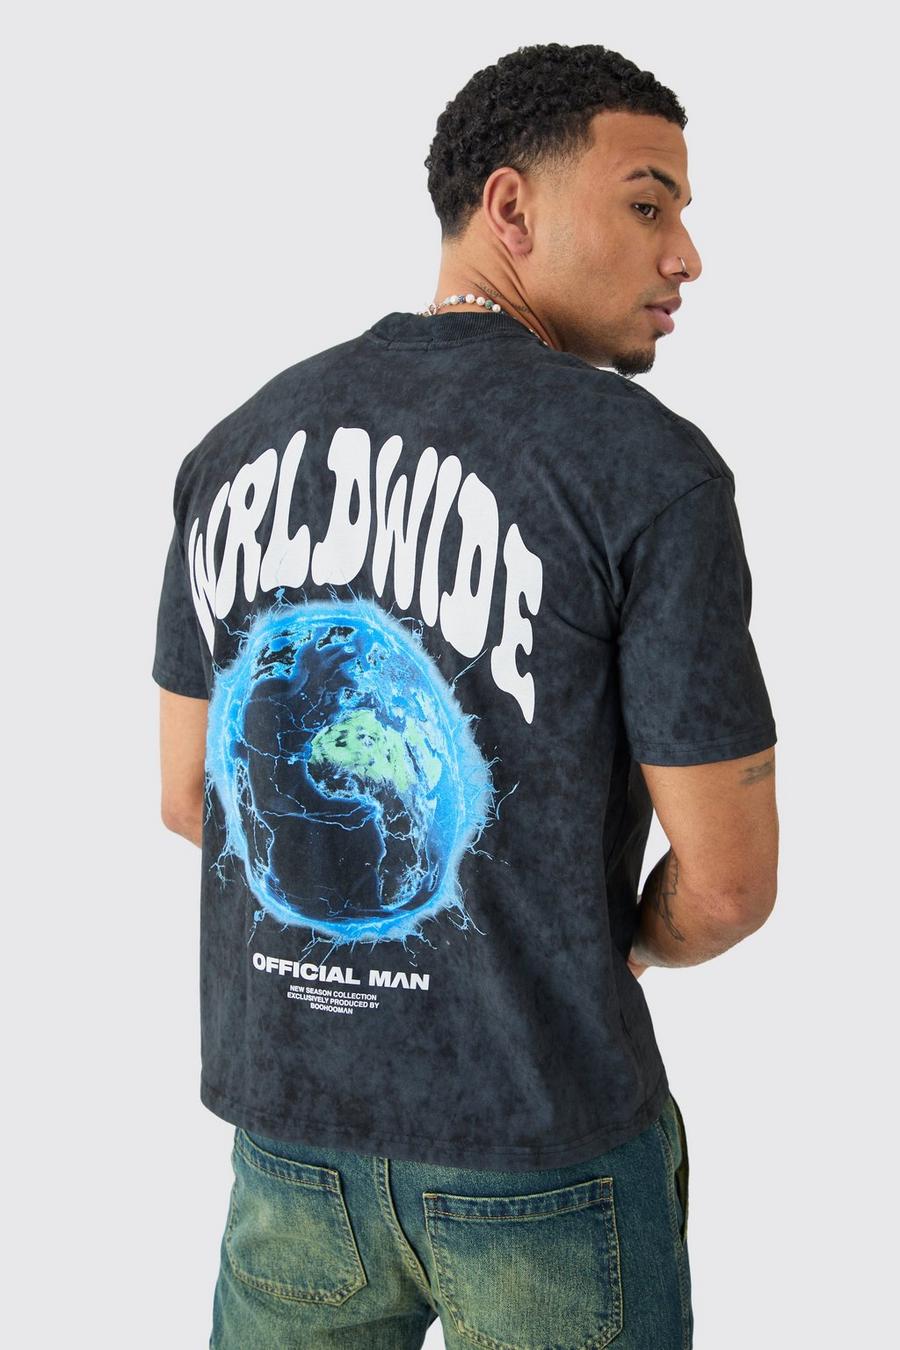 Kastiges Worldwide T-Shirt, Black